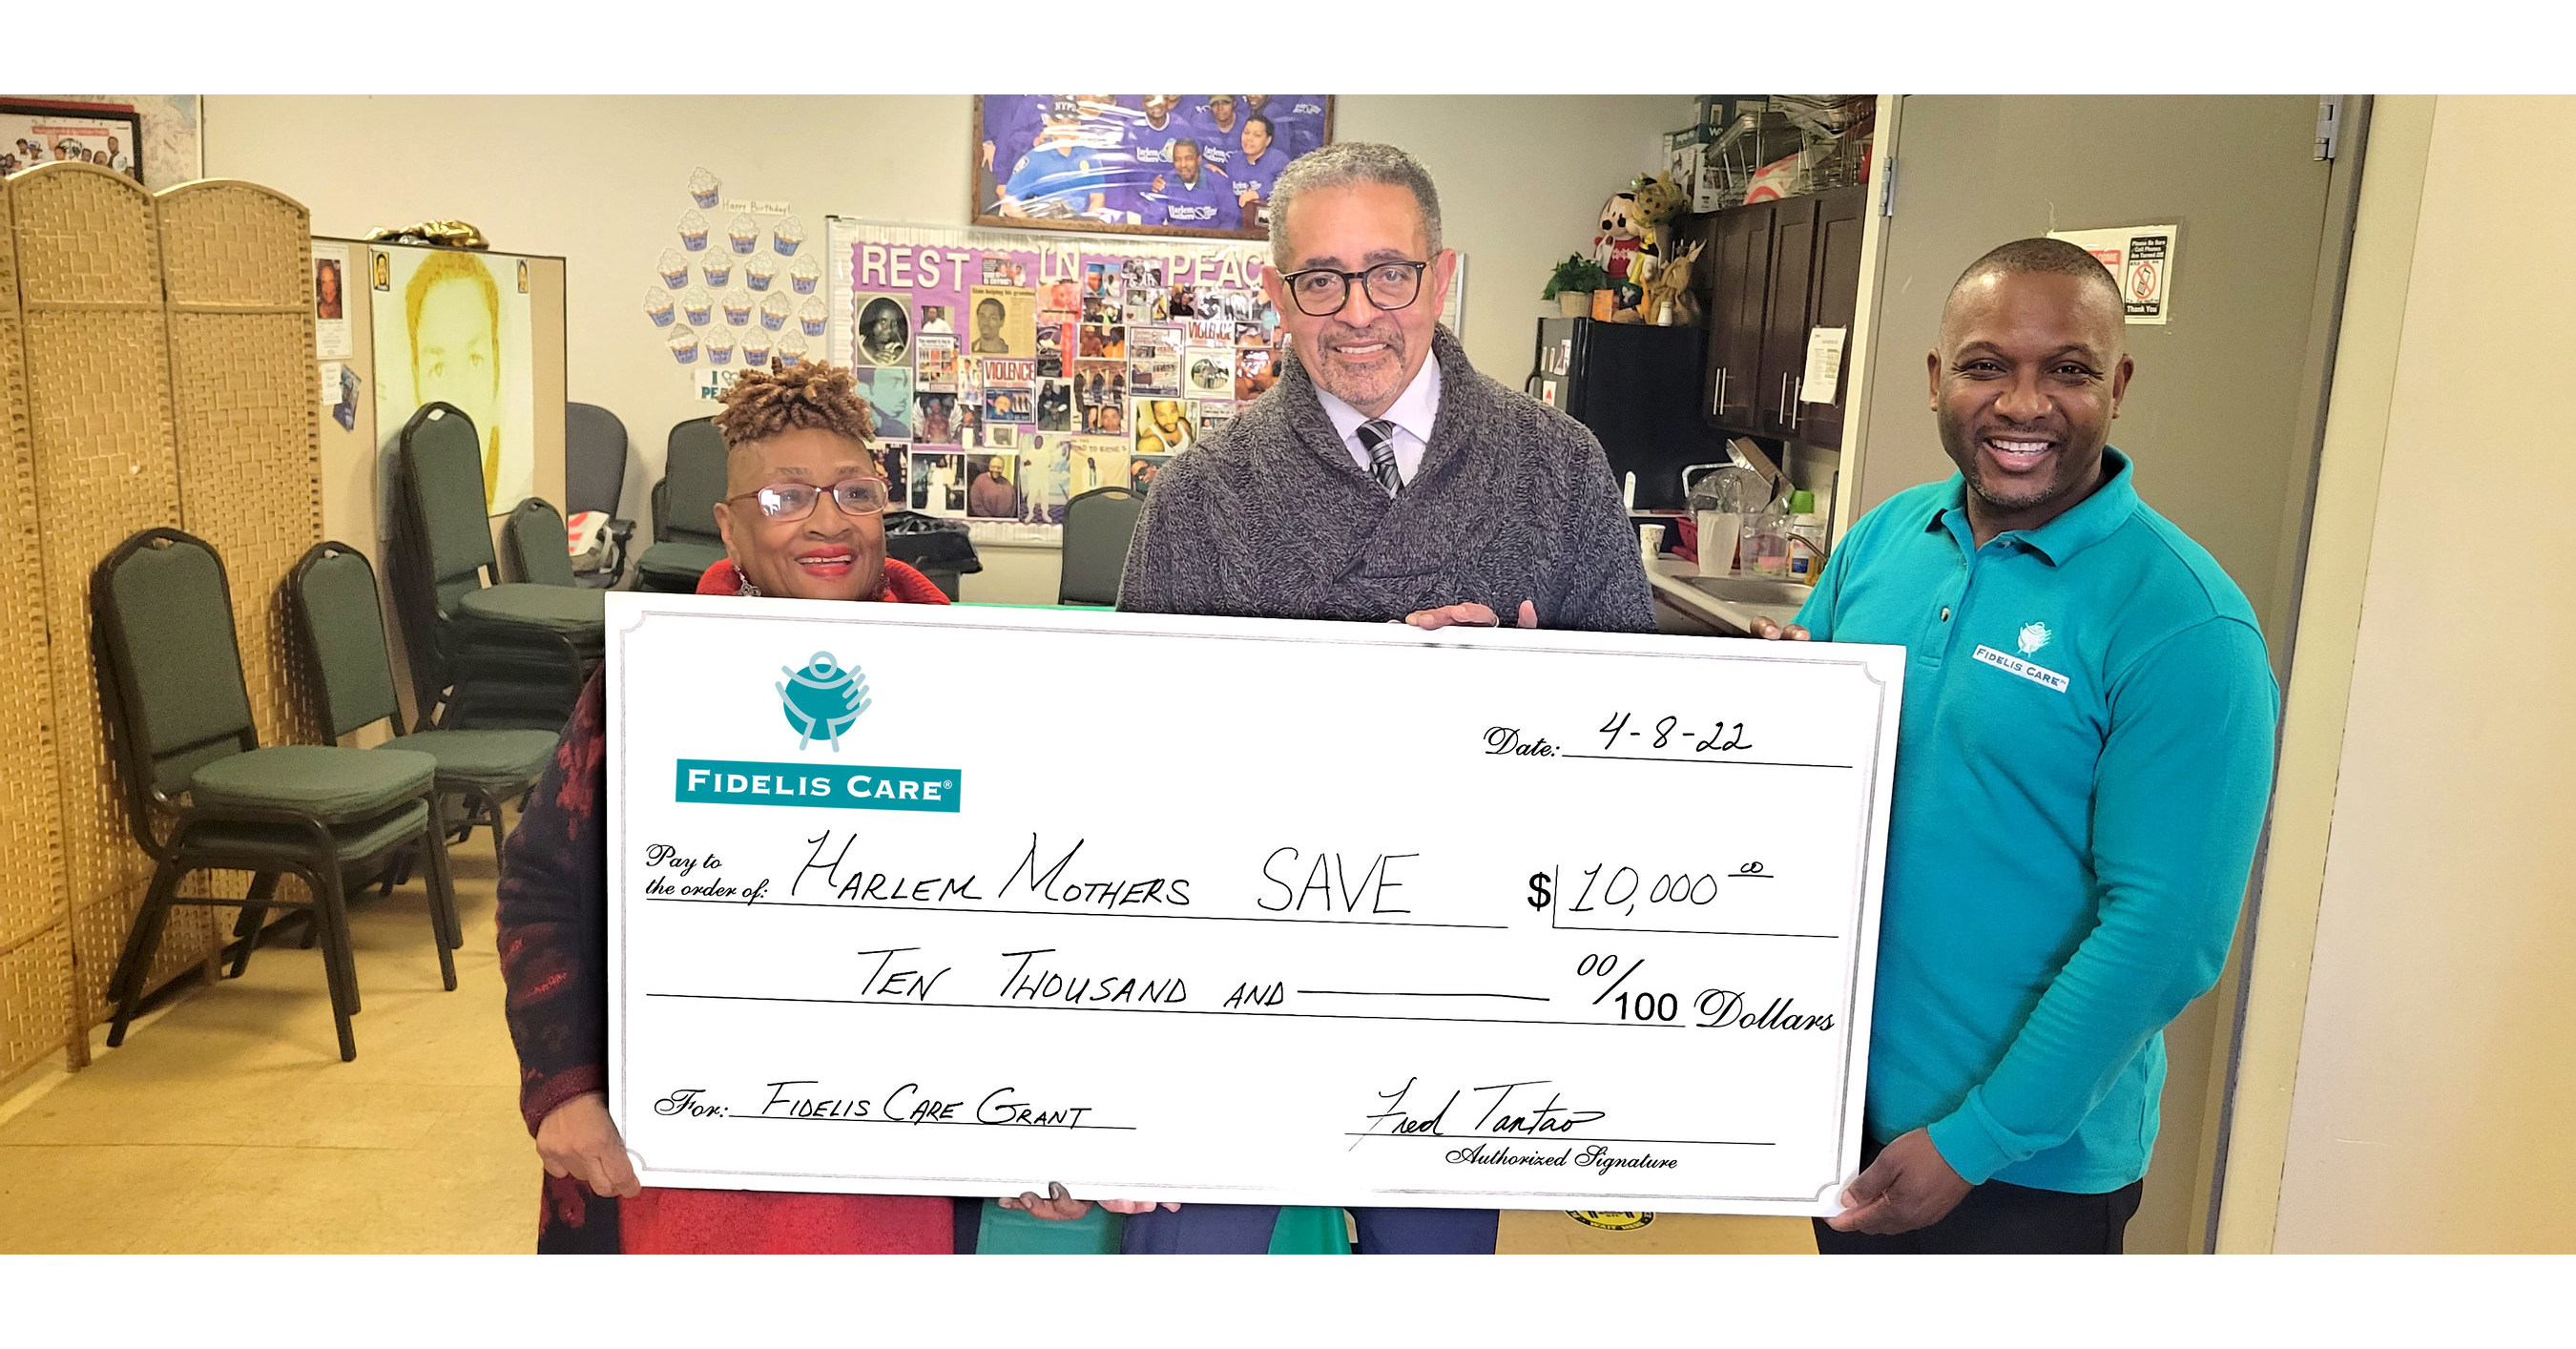 Fidelis Care Awards $10,000 to Harlem Mothers Save